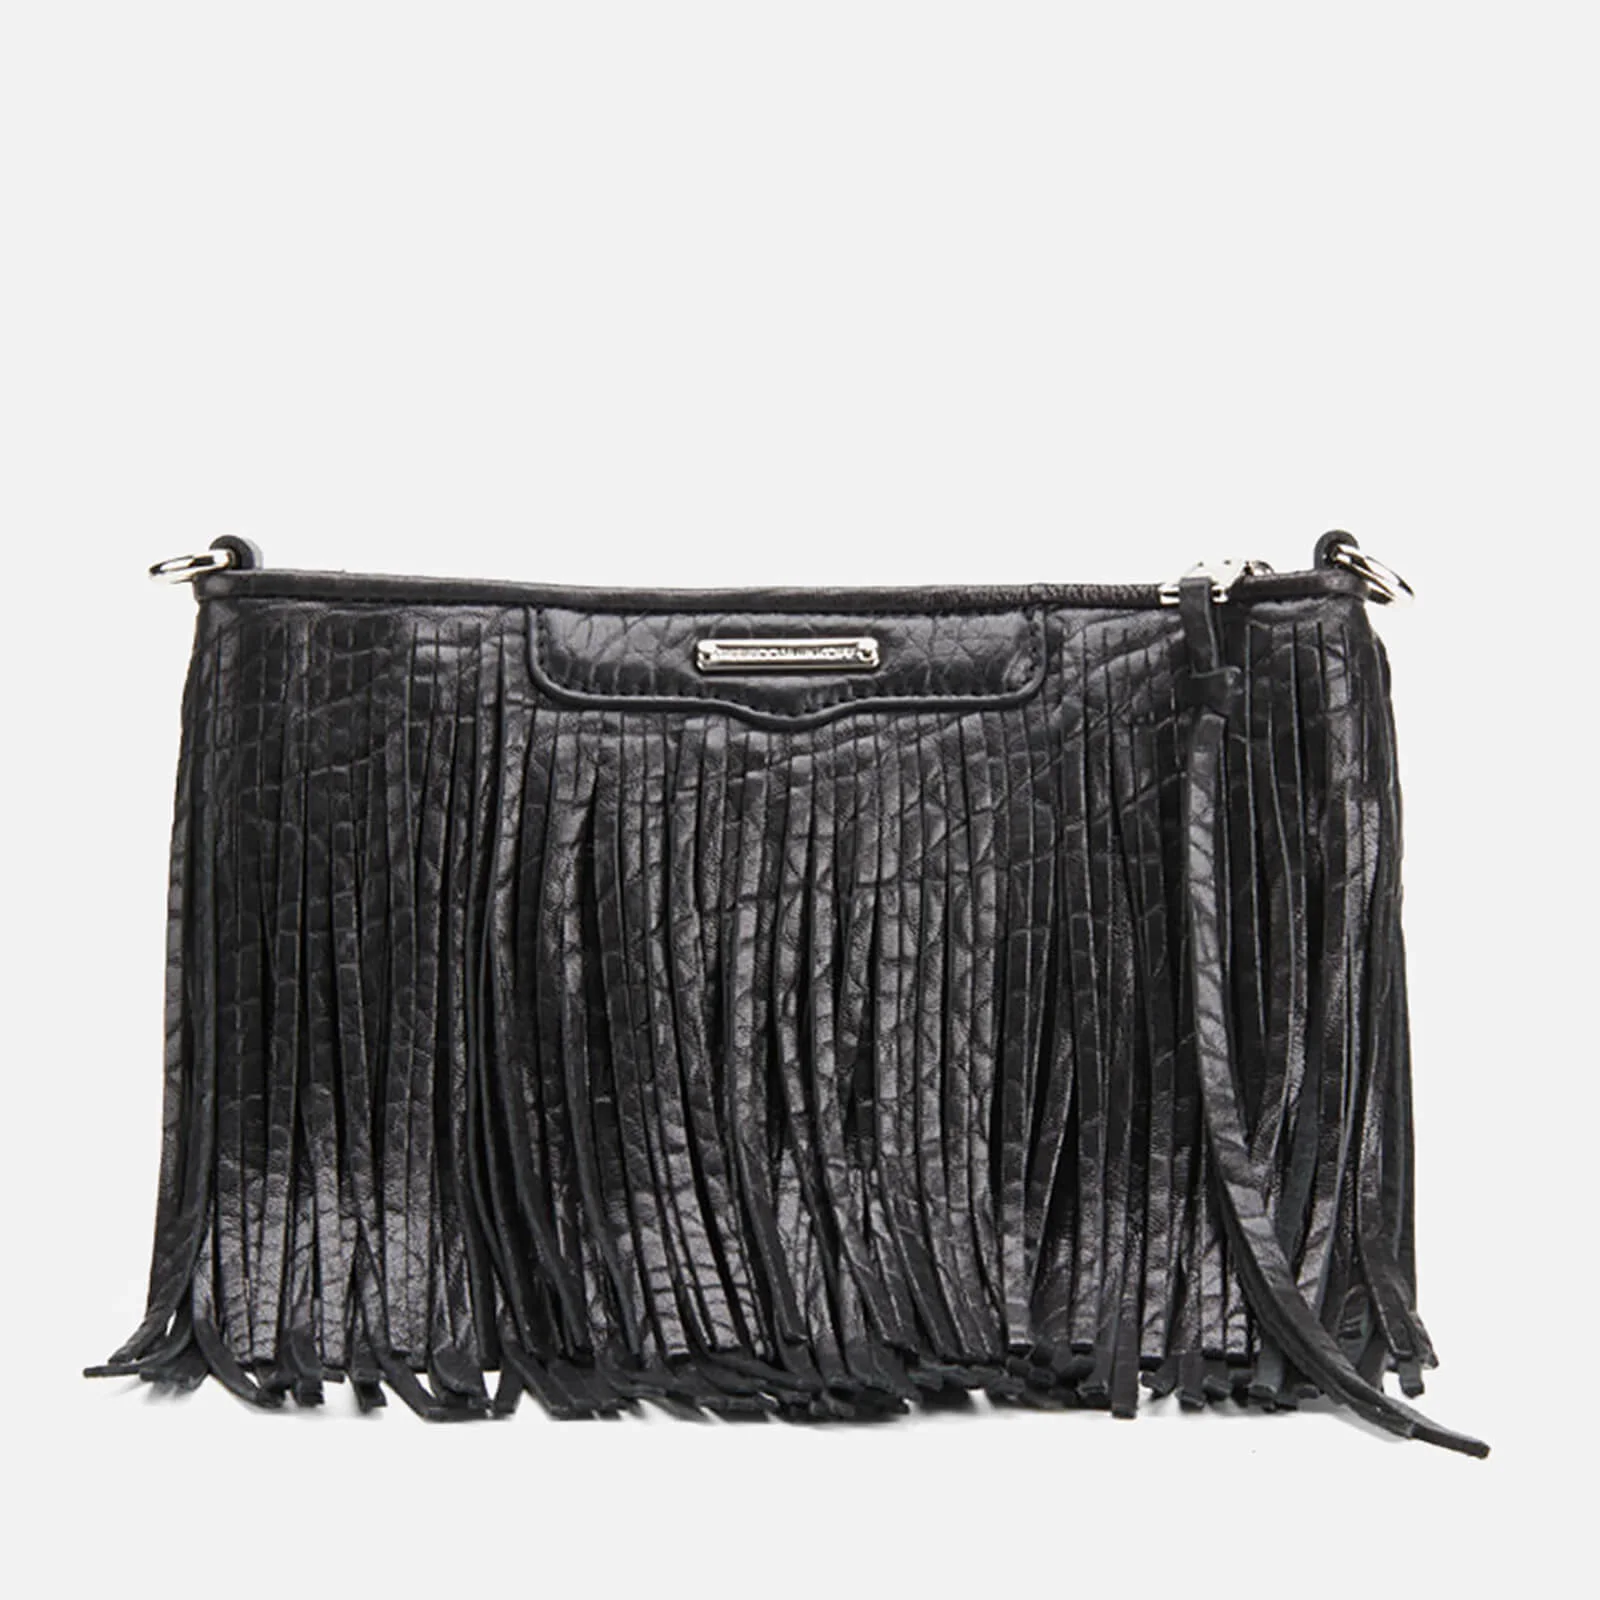 Rebecca Minkoff Finn Fringe Leather Clutch Bag - Black Image 1